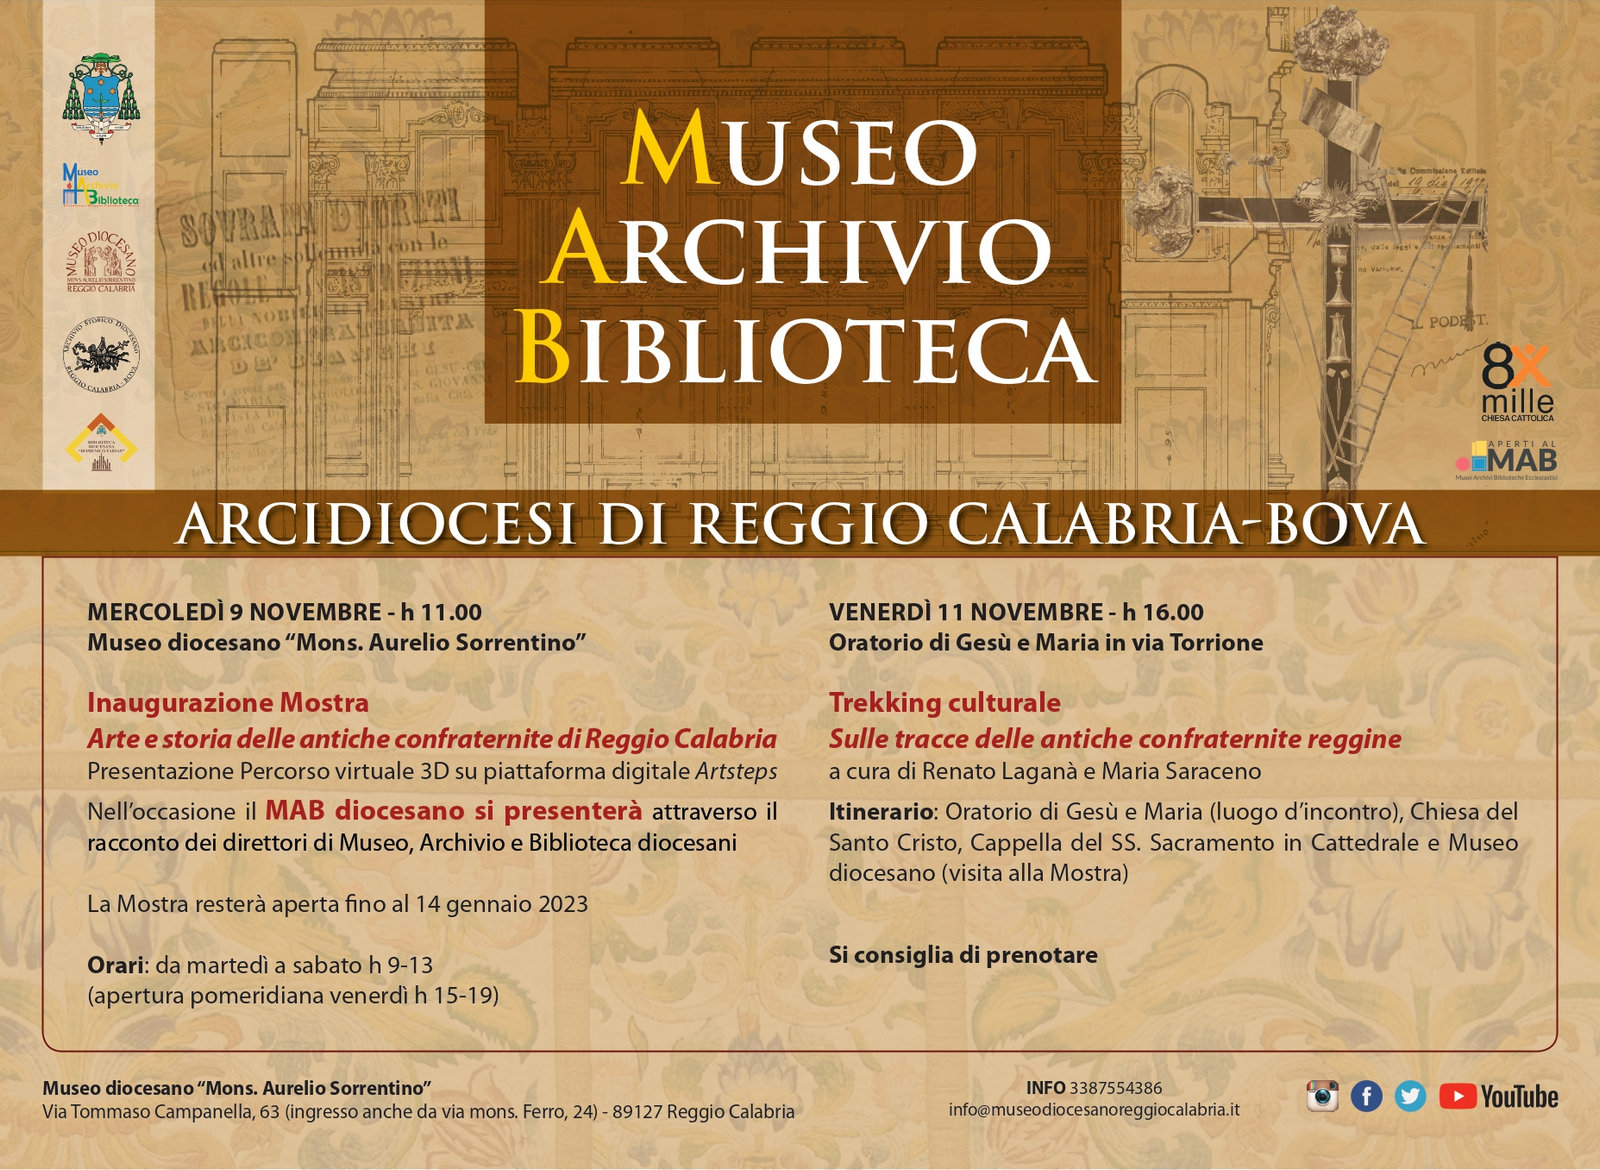 MAB (Museo Archivio Biblioteca)